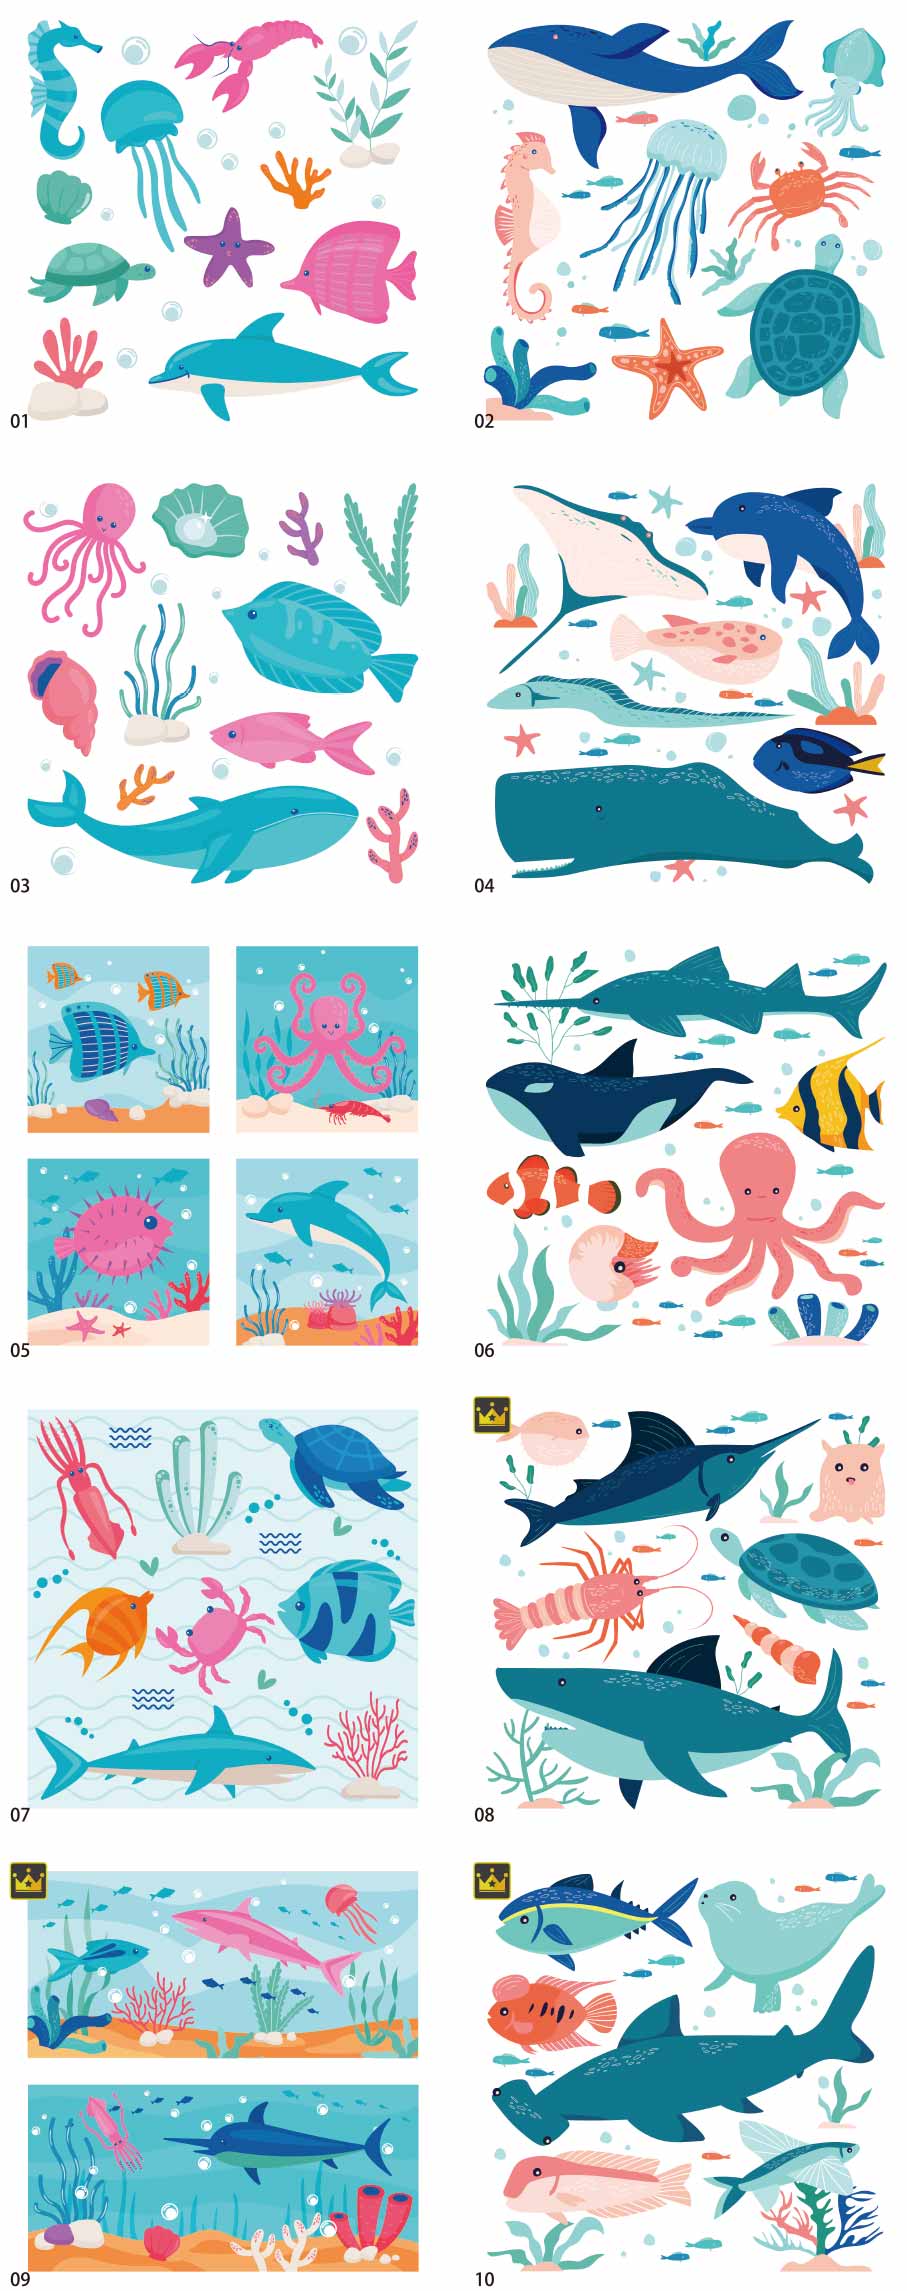 Sea creature illustration collection